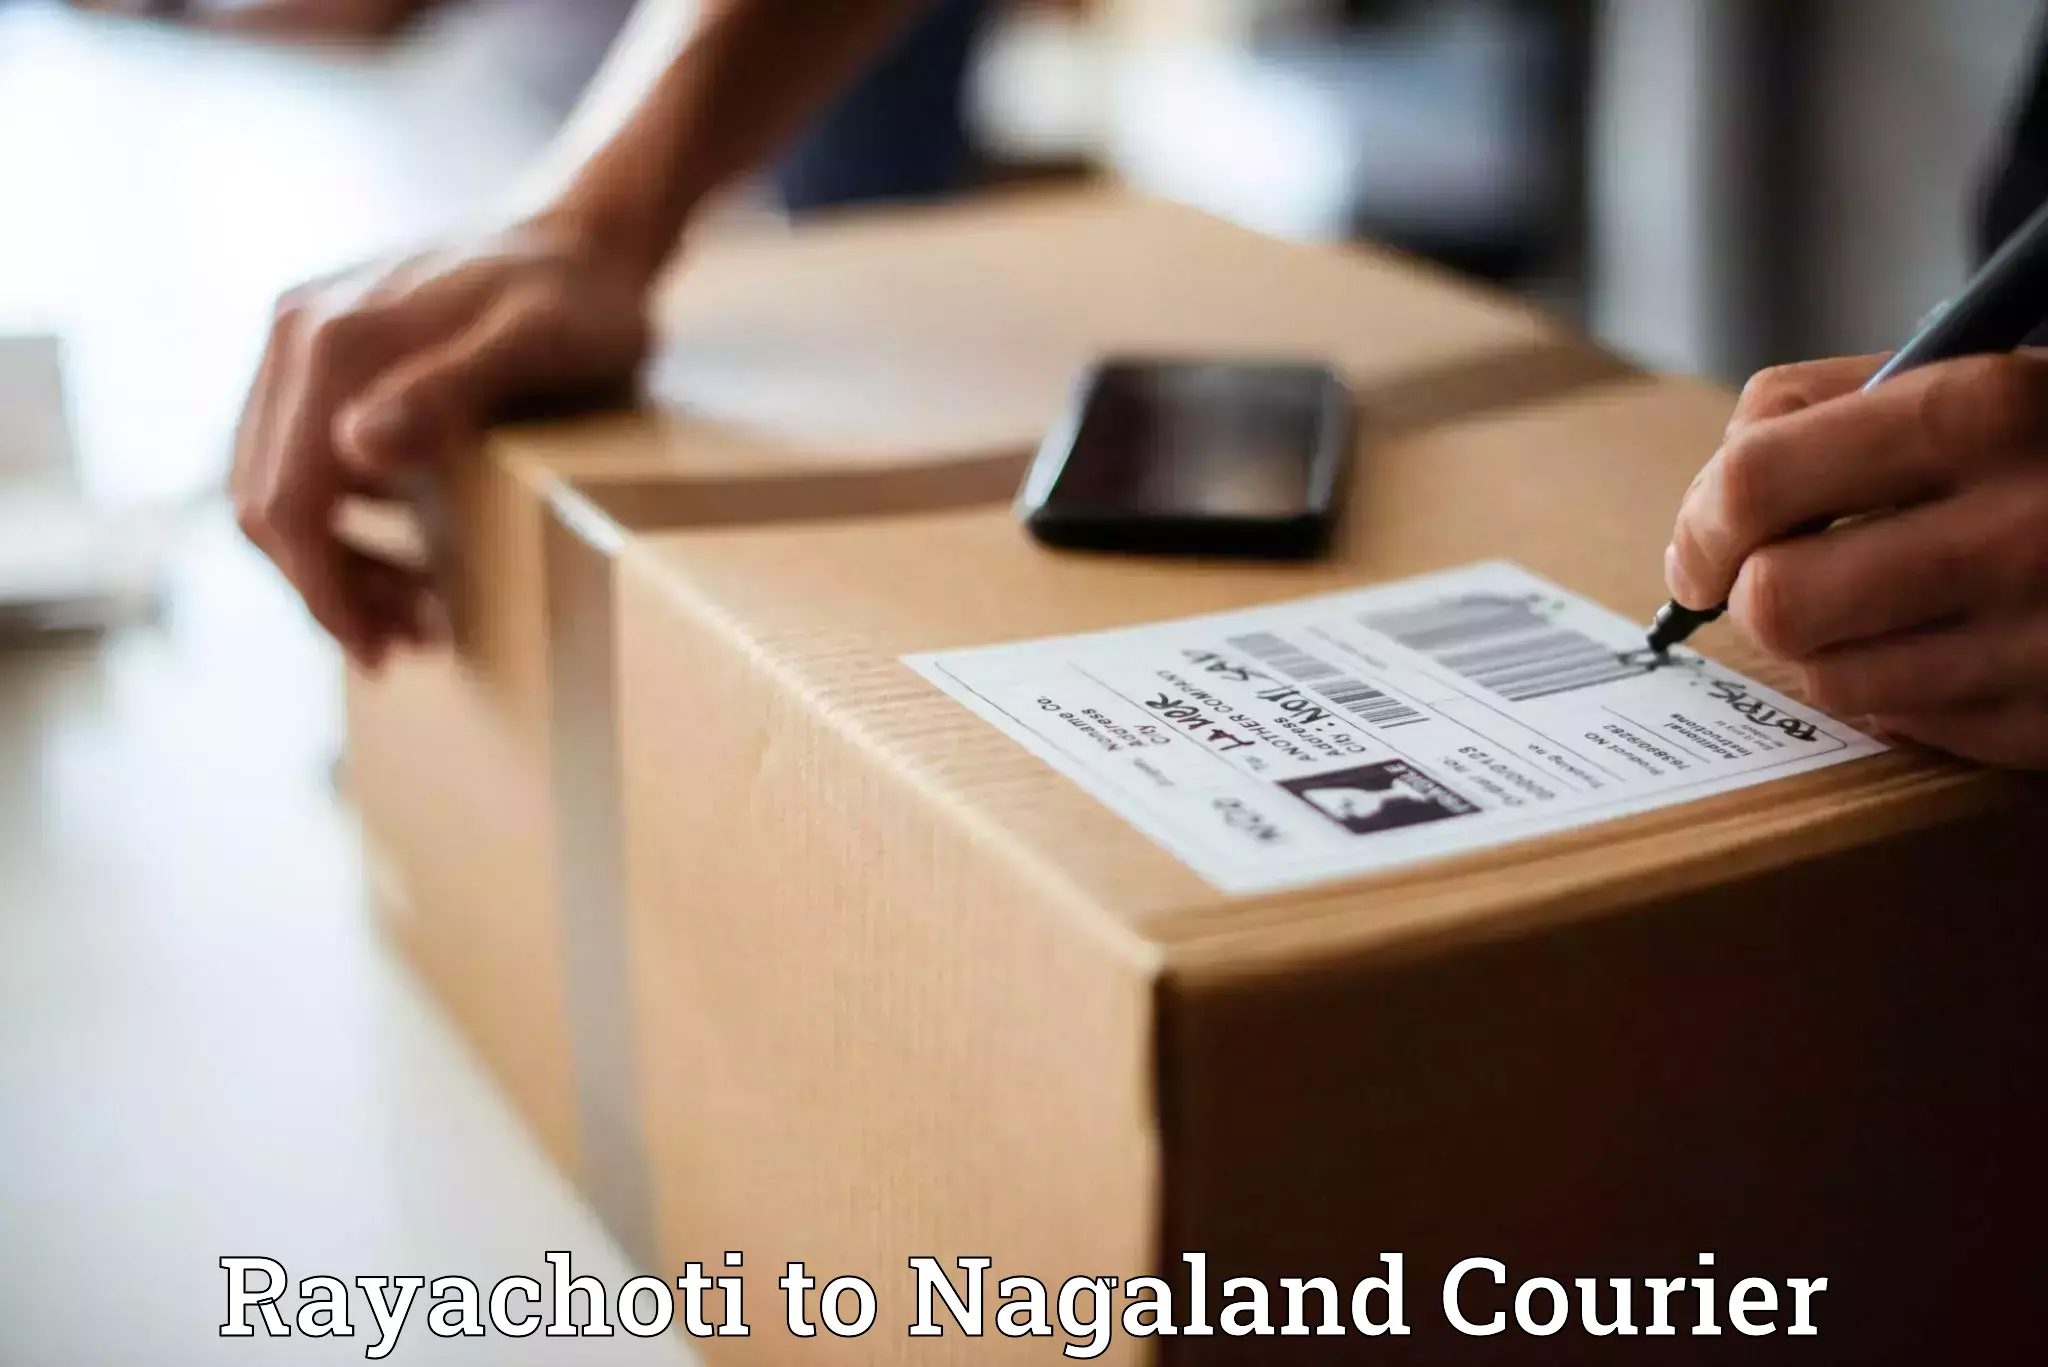 Optimized delivery routes Rayachoti to Nagaland